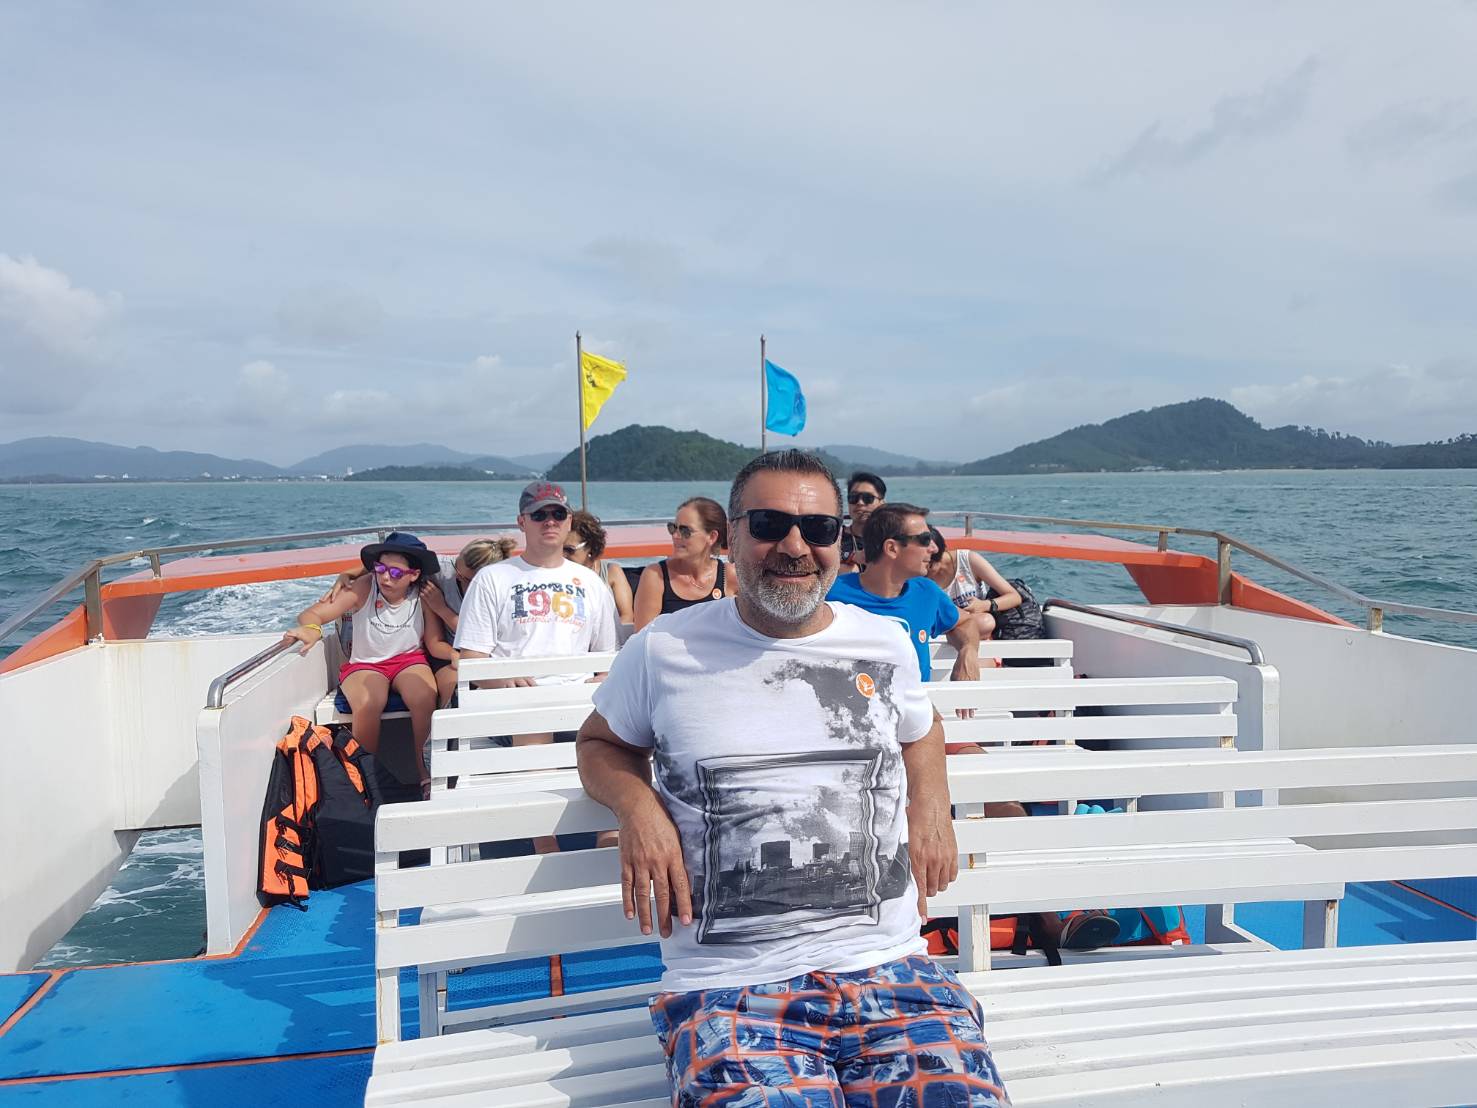 Phi Phi - Maya - Bamboo Island tour by Cruise Boat